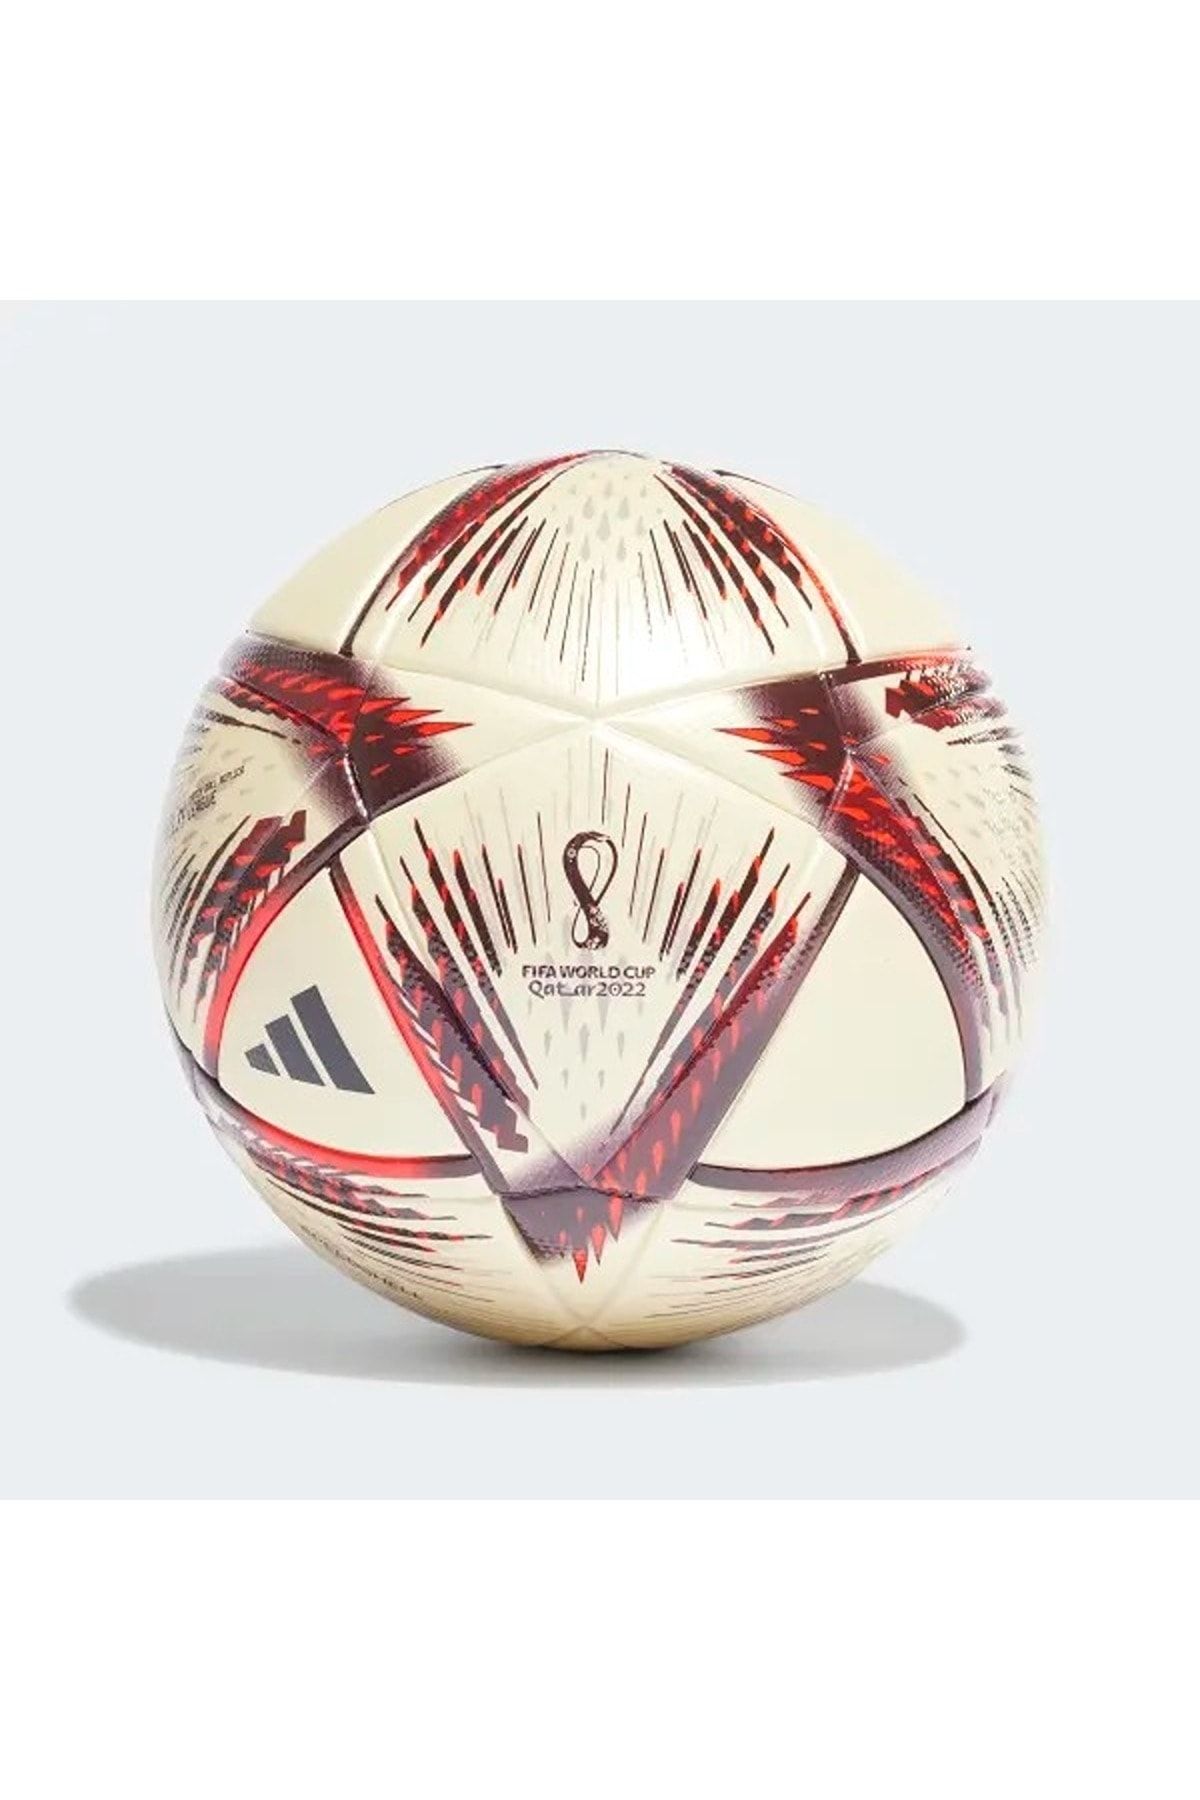 adidas Metalik Futbol Topu Hg4777 Pompa dahil değildir 5 Numara Çim Saha World Cup 2022